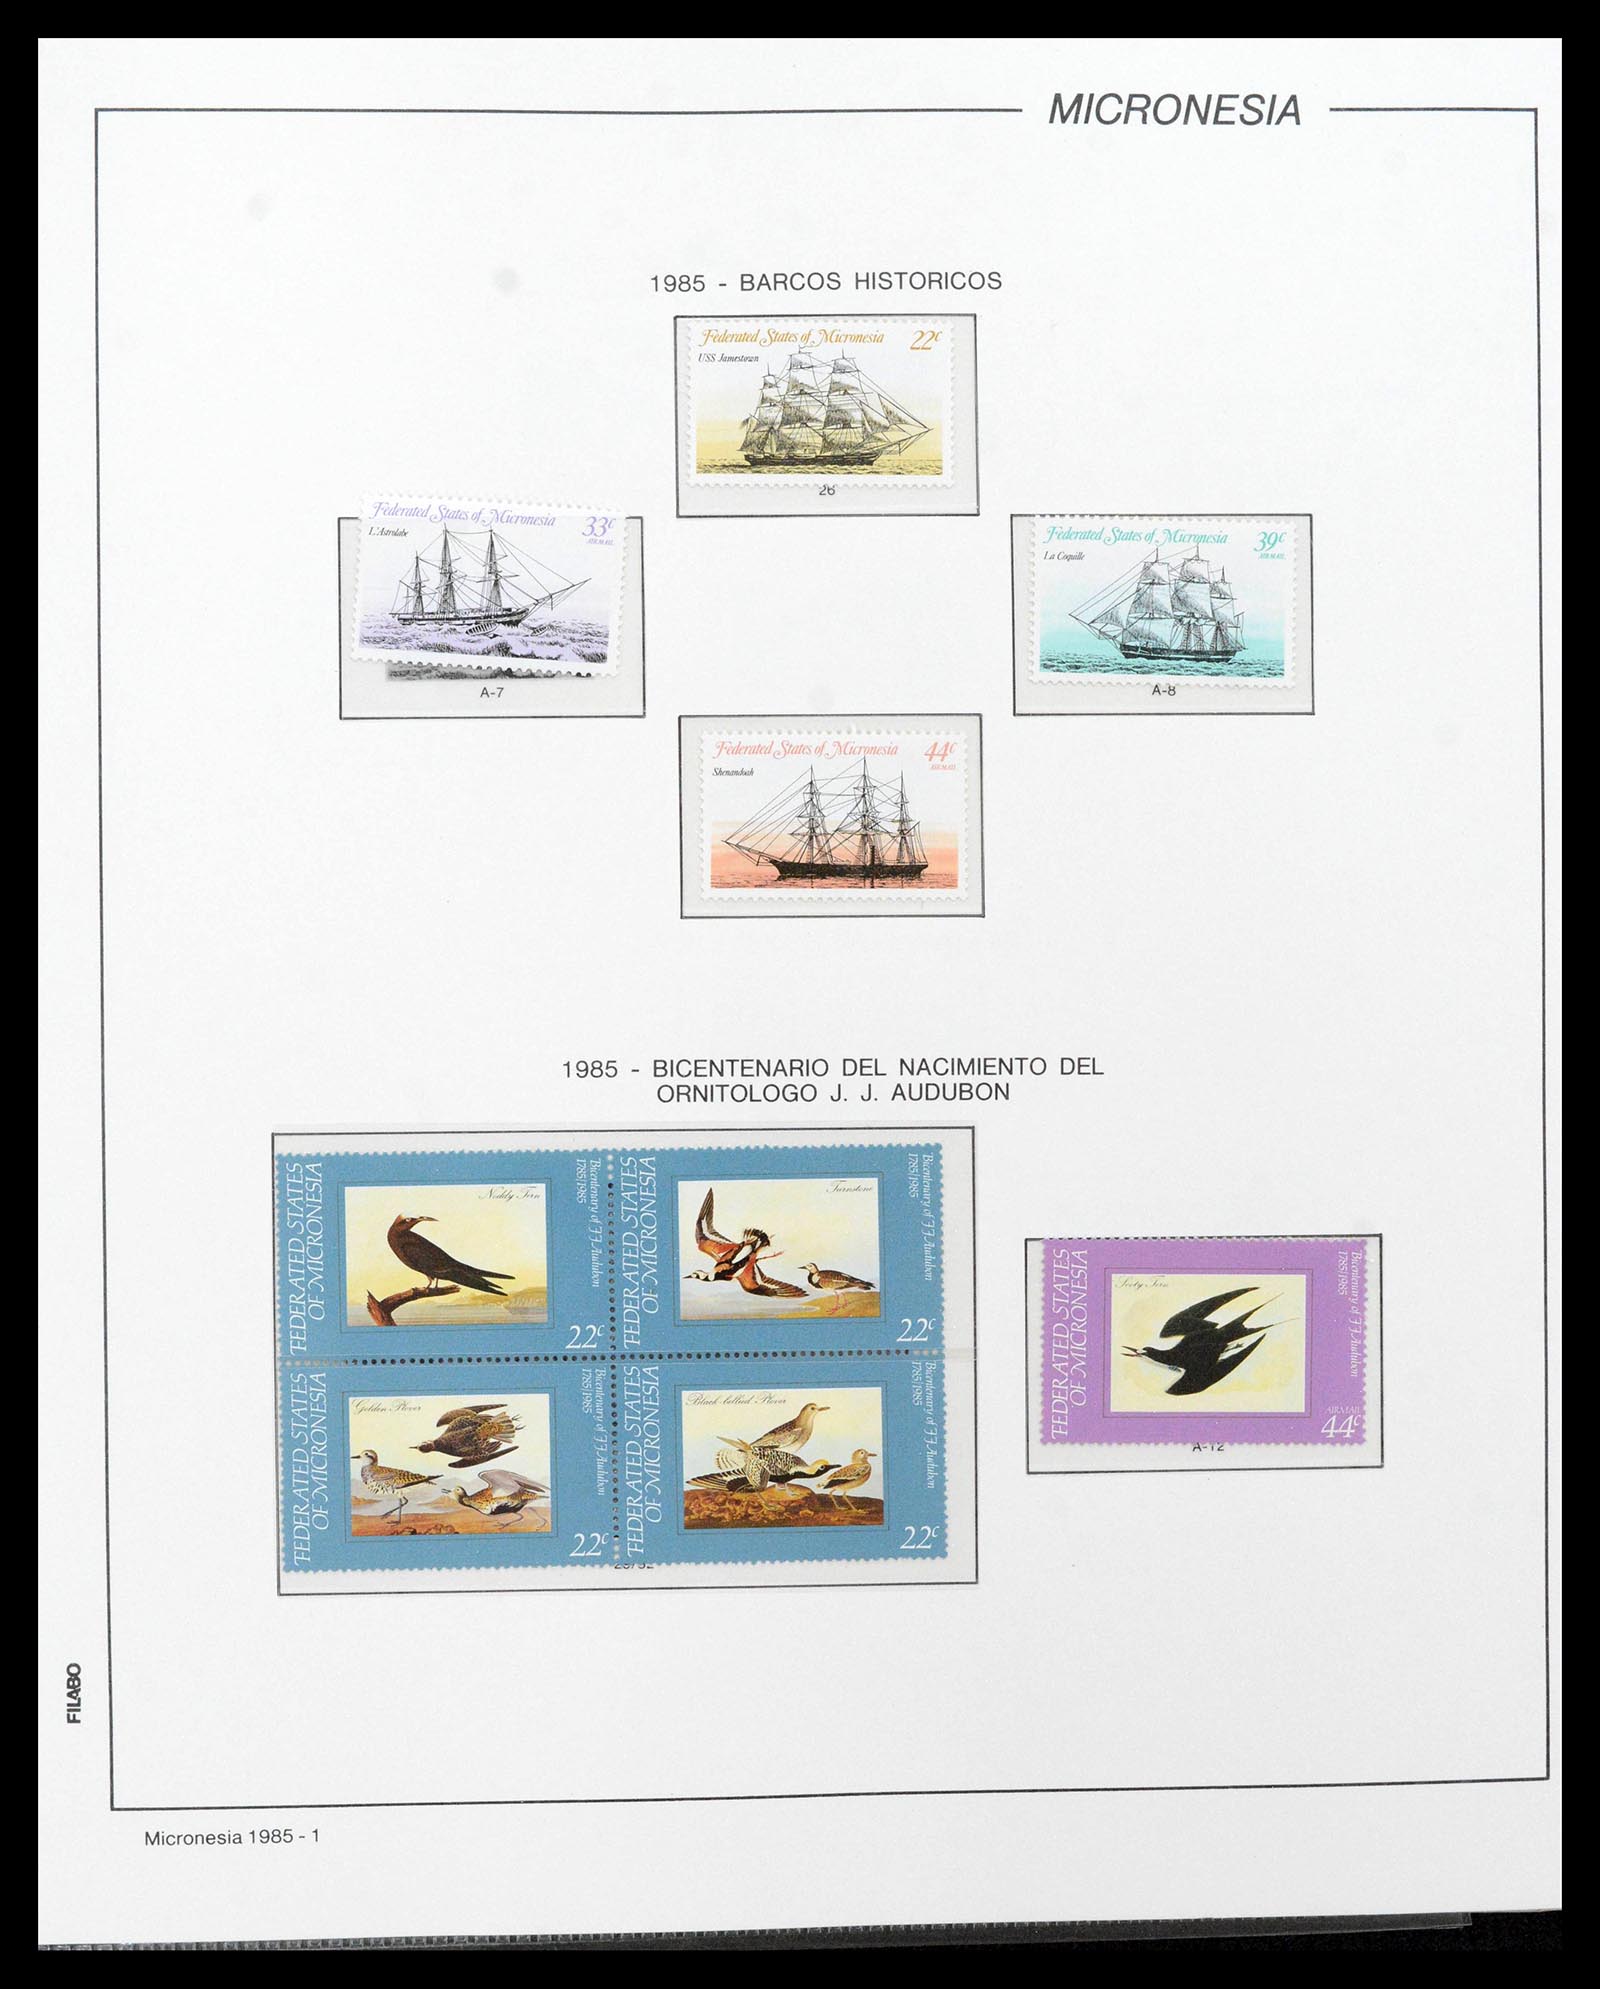 39222 0067 - Stamp collection 39222 Palau, Micronesia and Marshall islands 1980-1995.